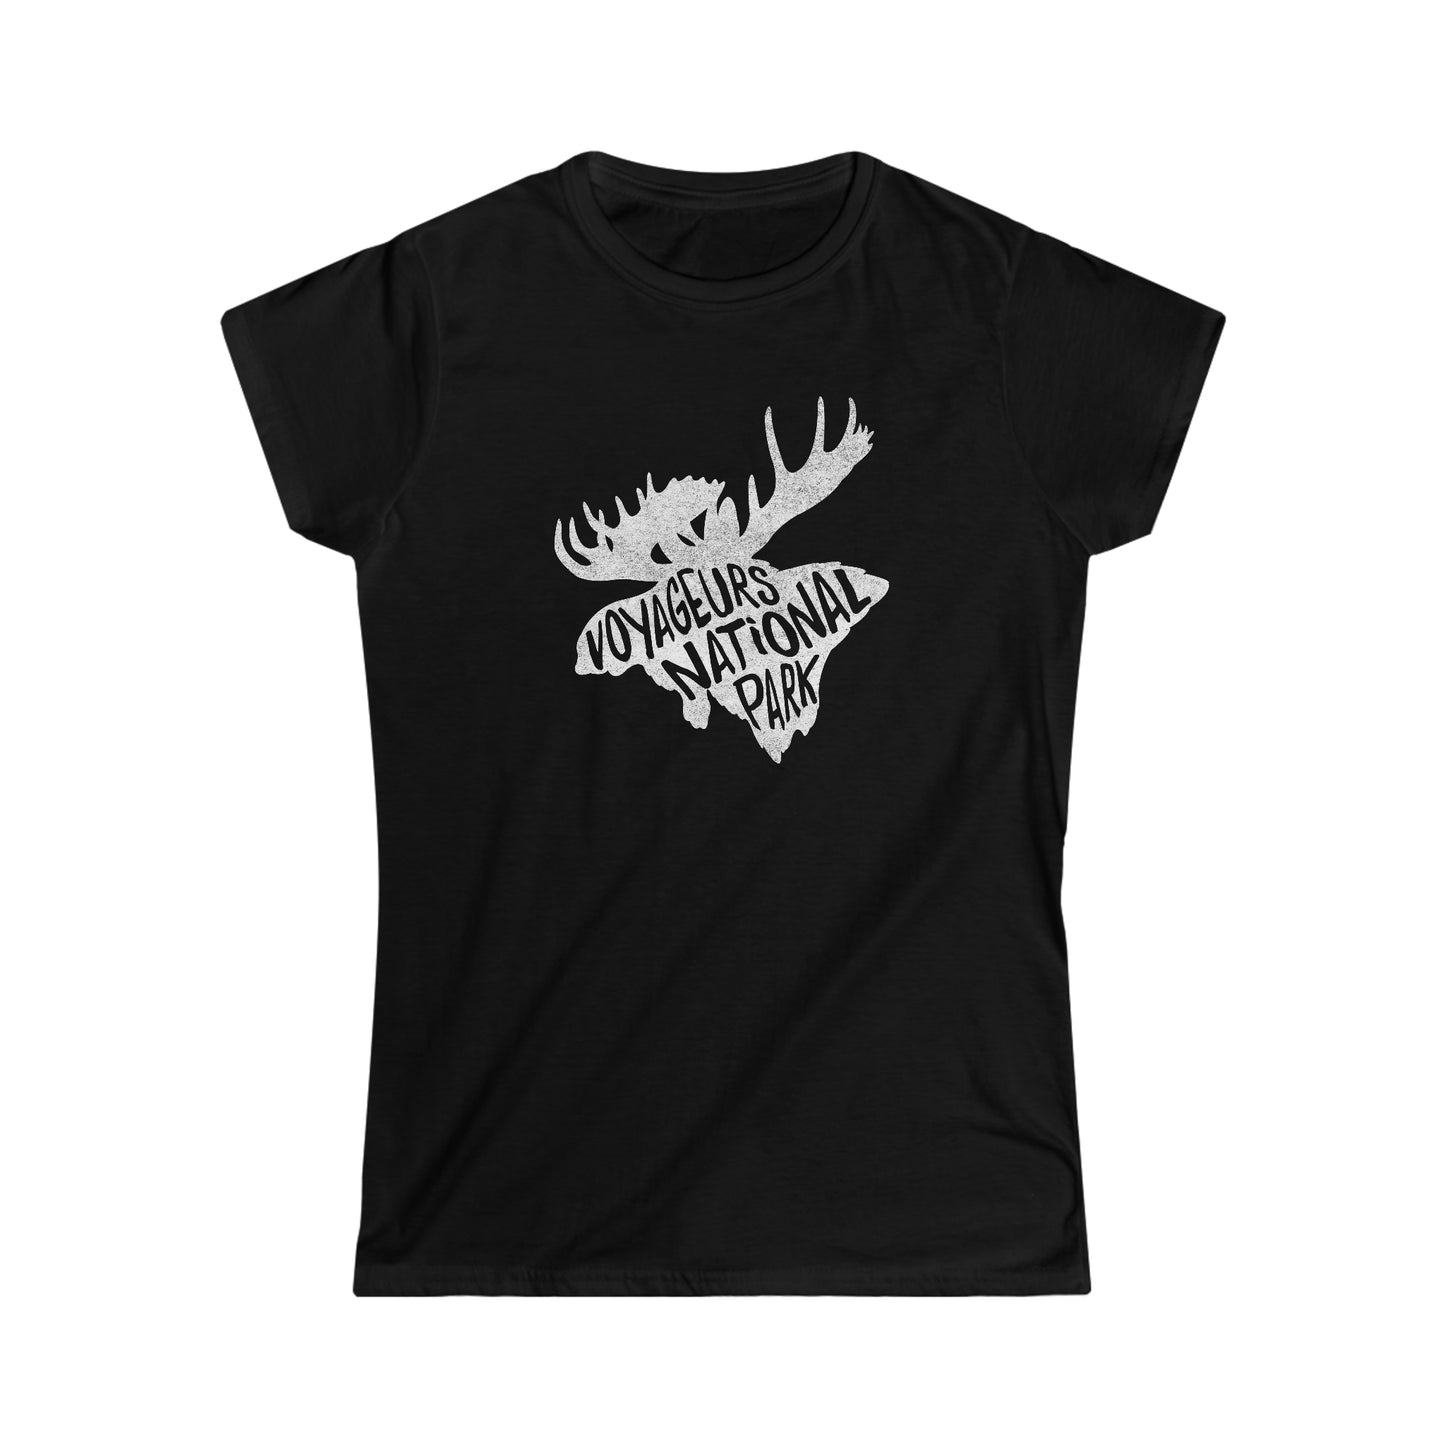 Voyageurs National Park Women's T-Shirt - Moose